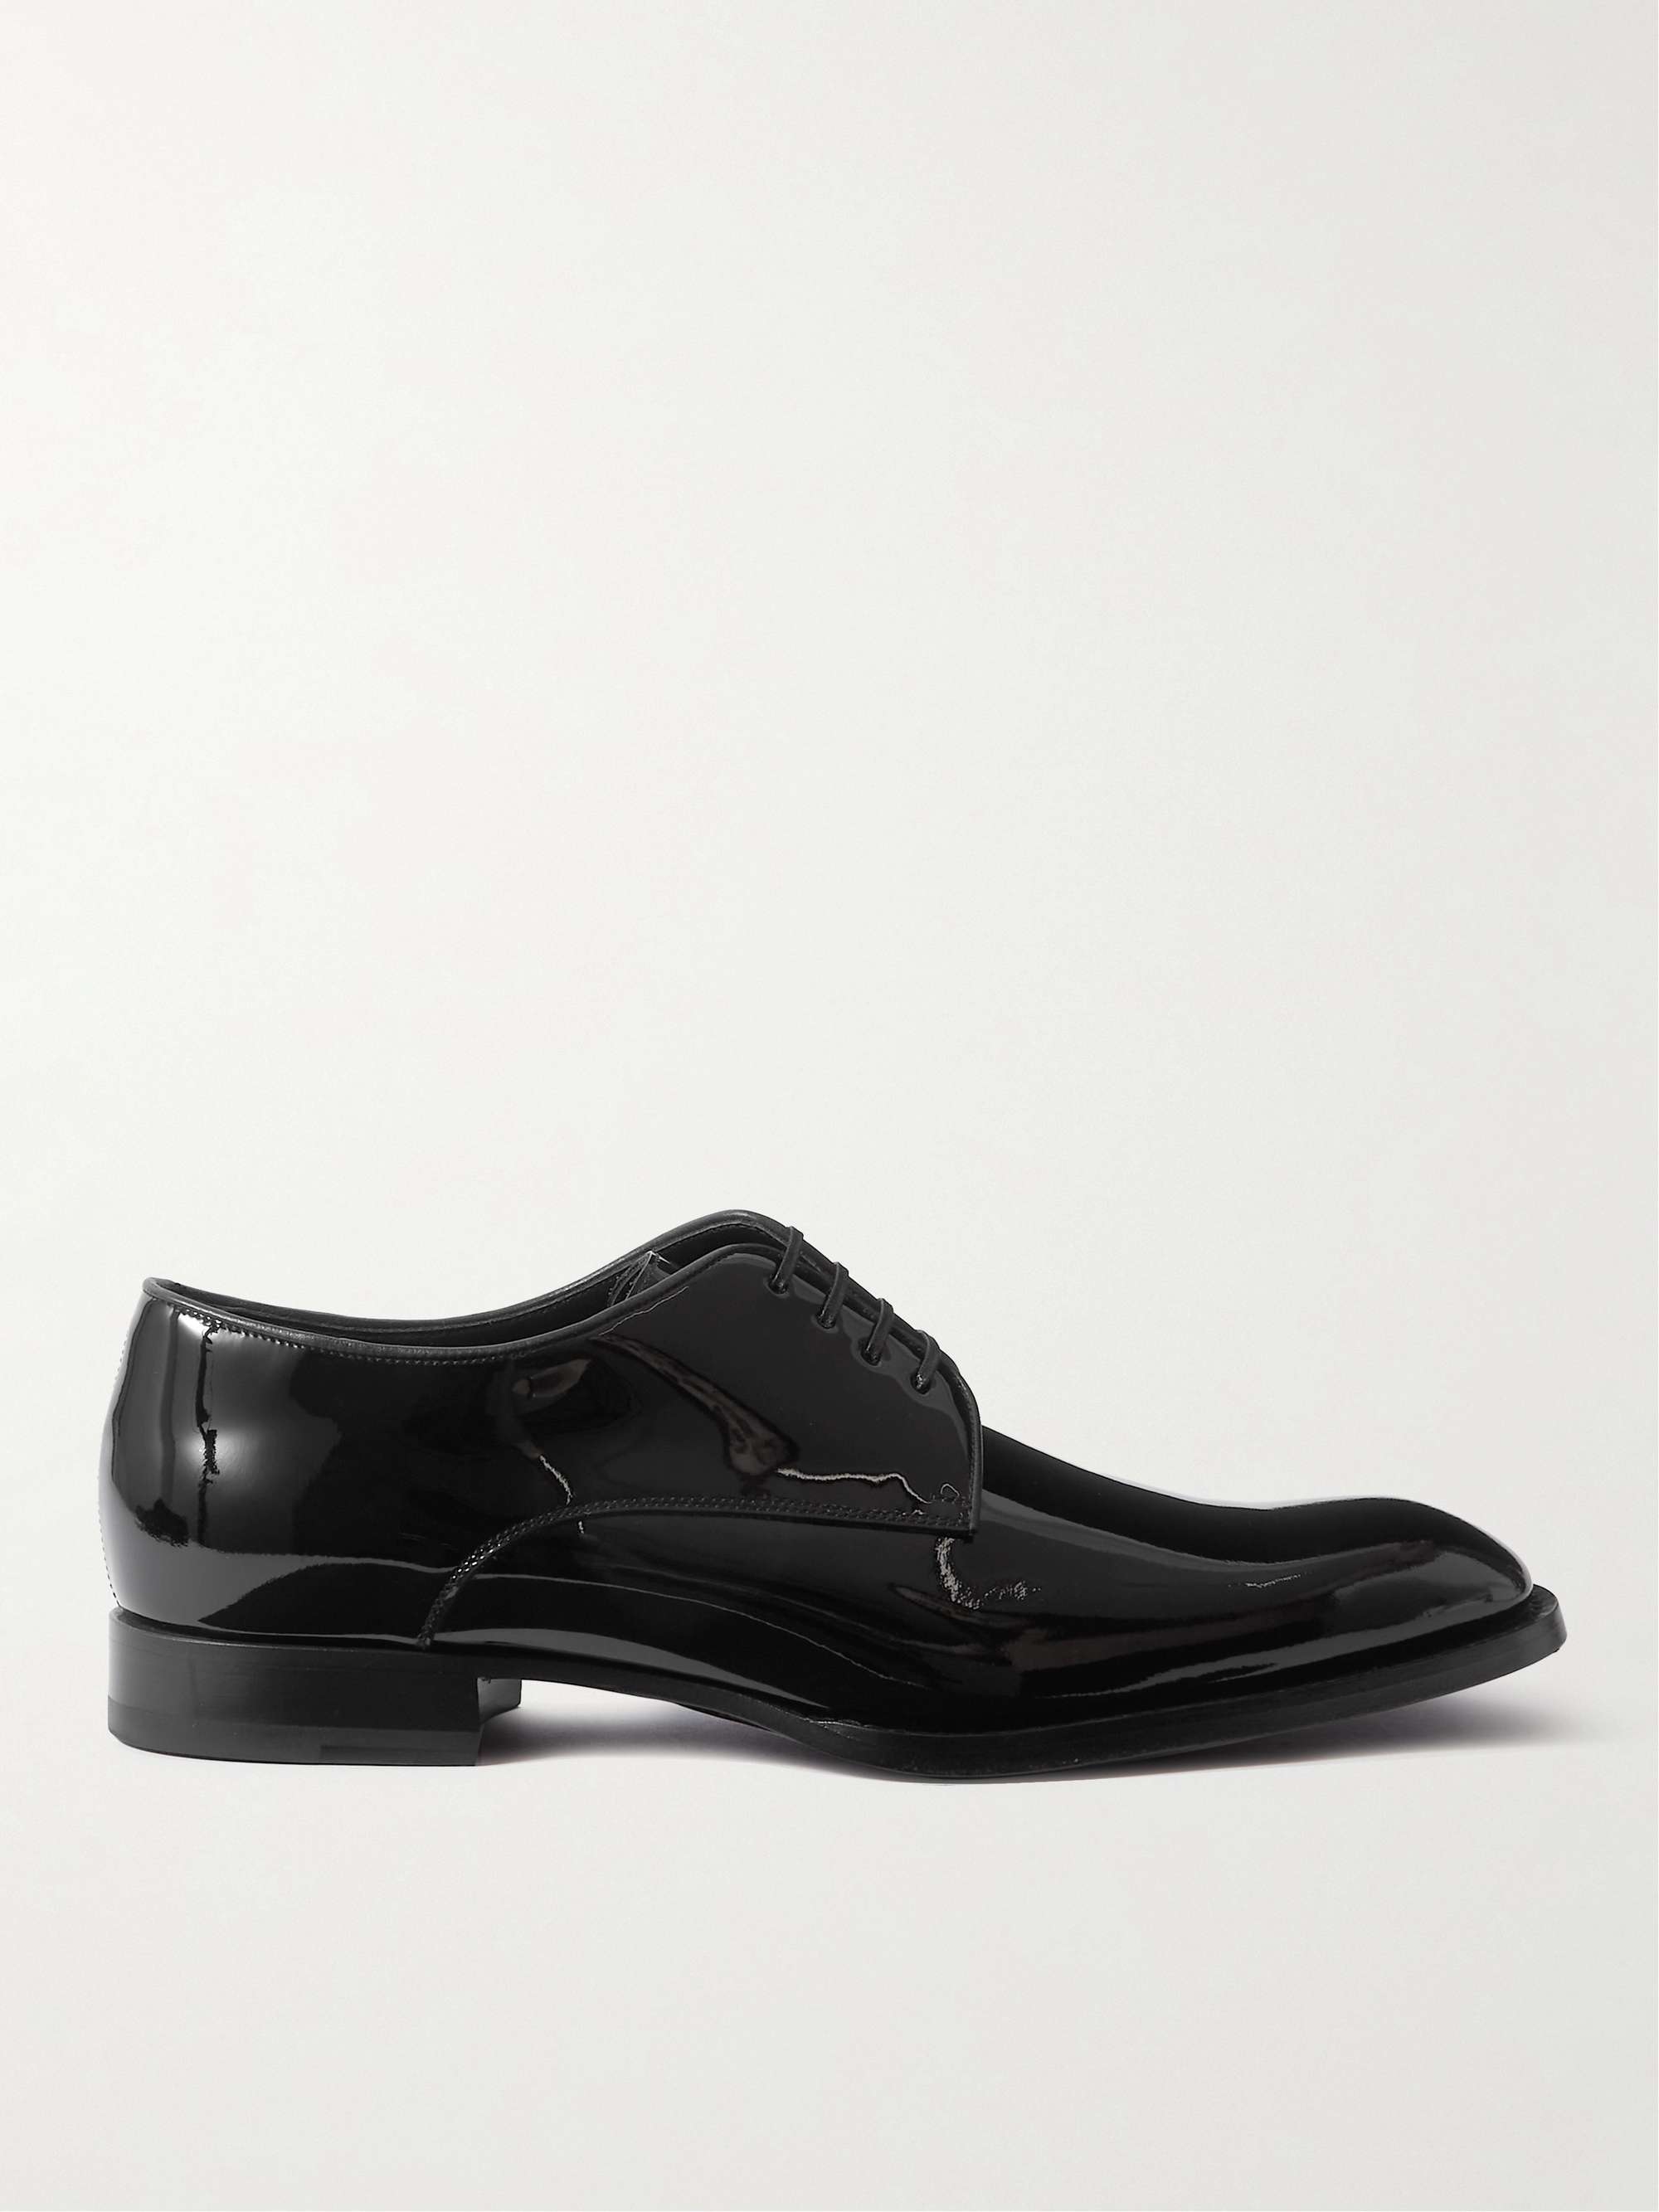 CELINE HOMME Patent-Leather Derby Shoes | MR PORTER